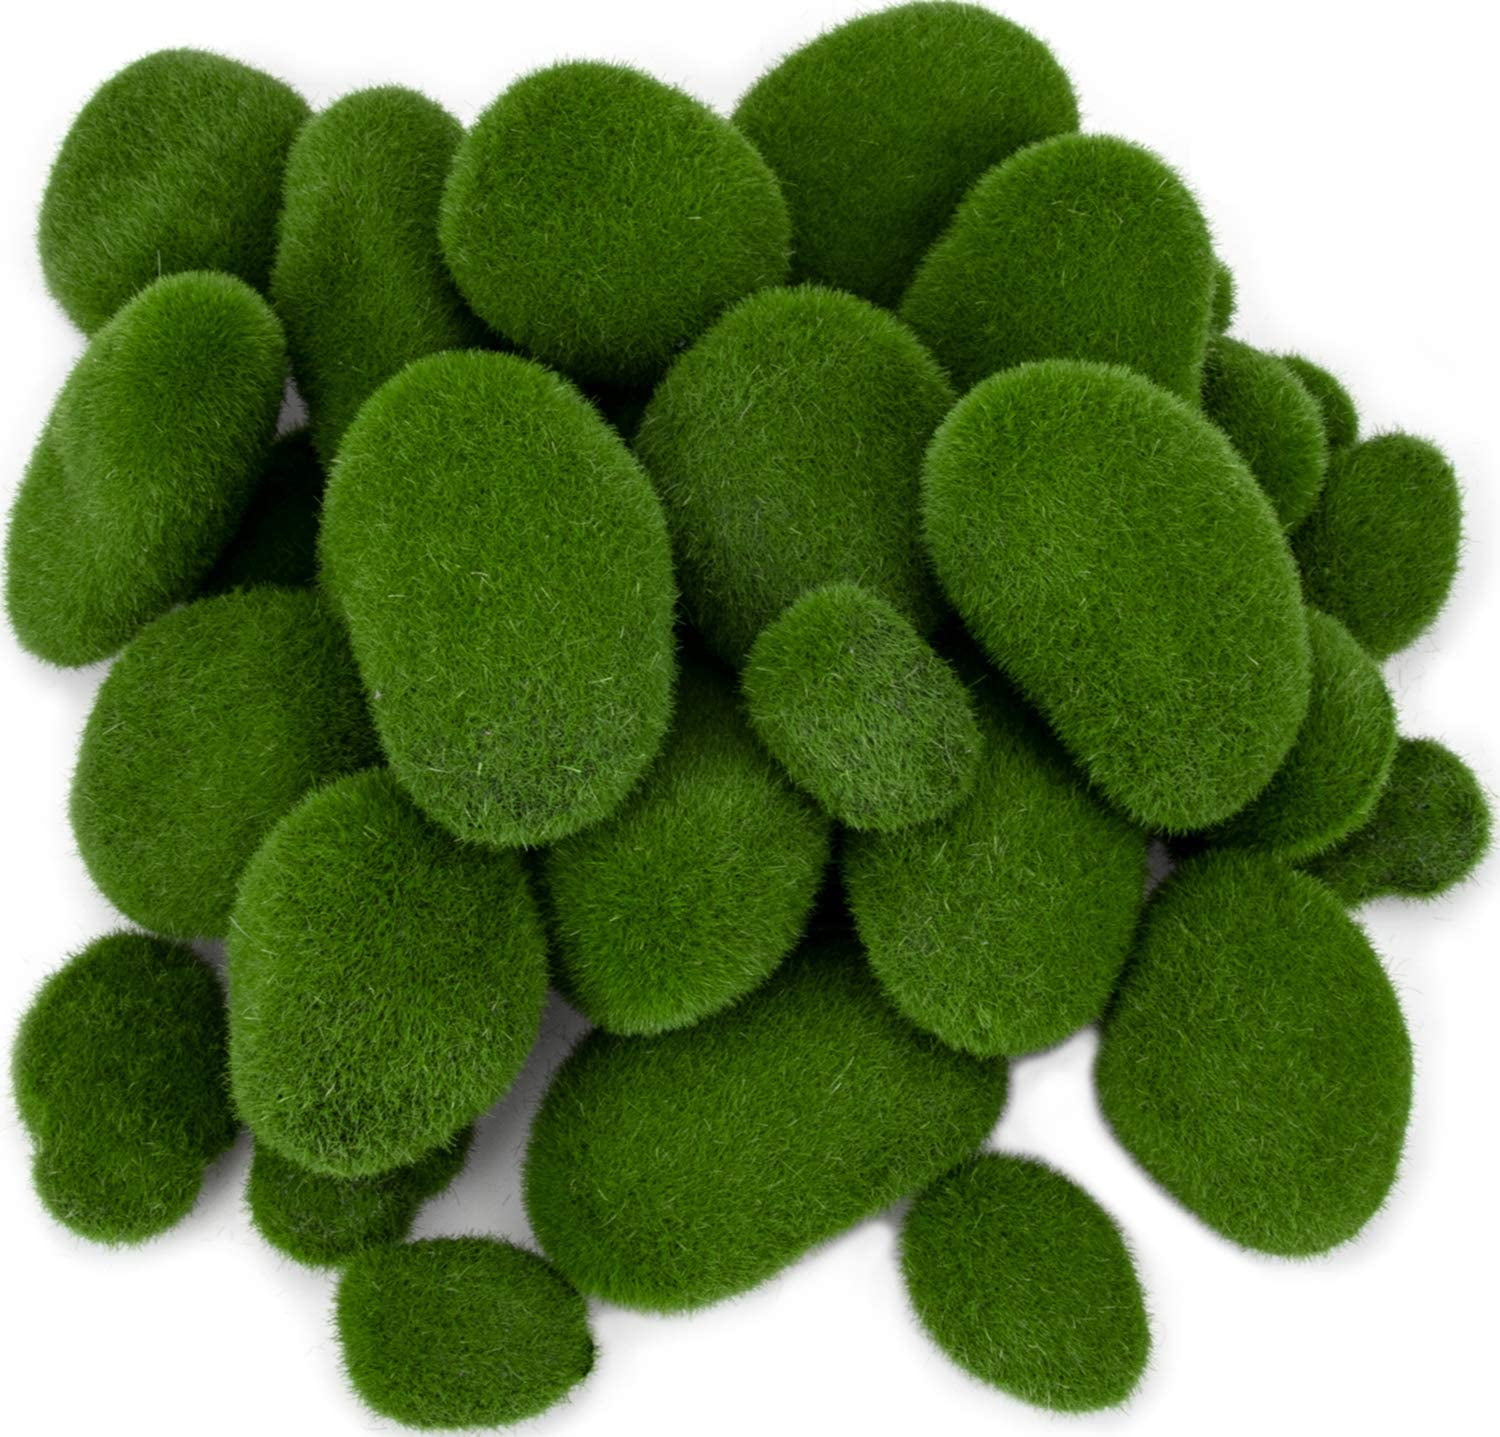 DUENEW 40PCS Artificial Moss Rocks Decorative Moss Balls Green Moss Covered  Stones for Plants Decor Home Craft 4 Size